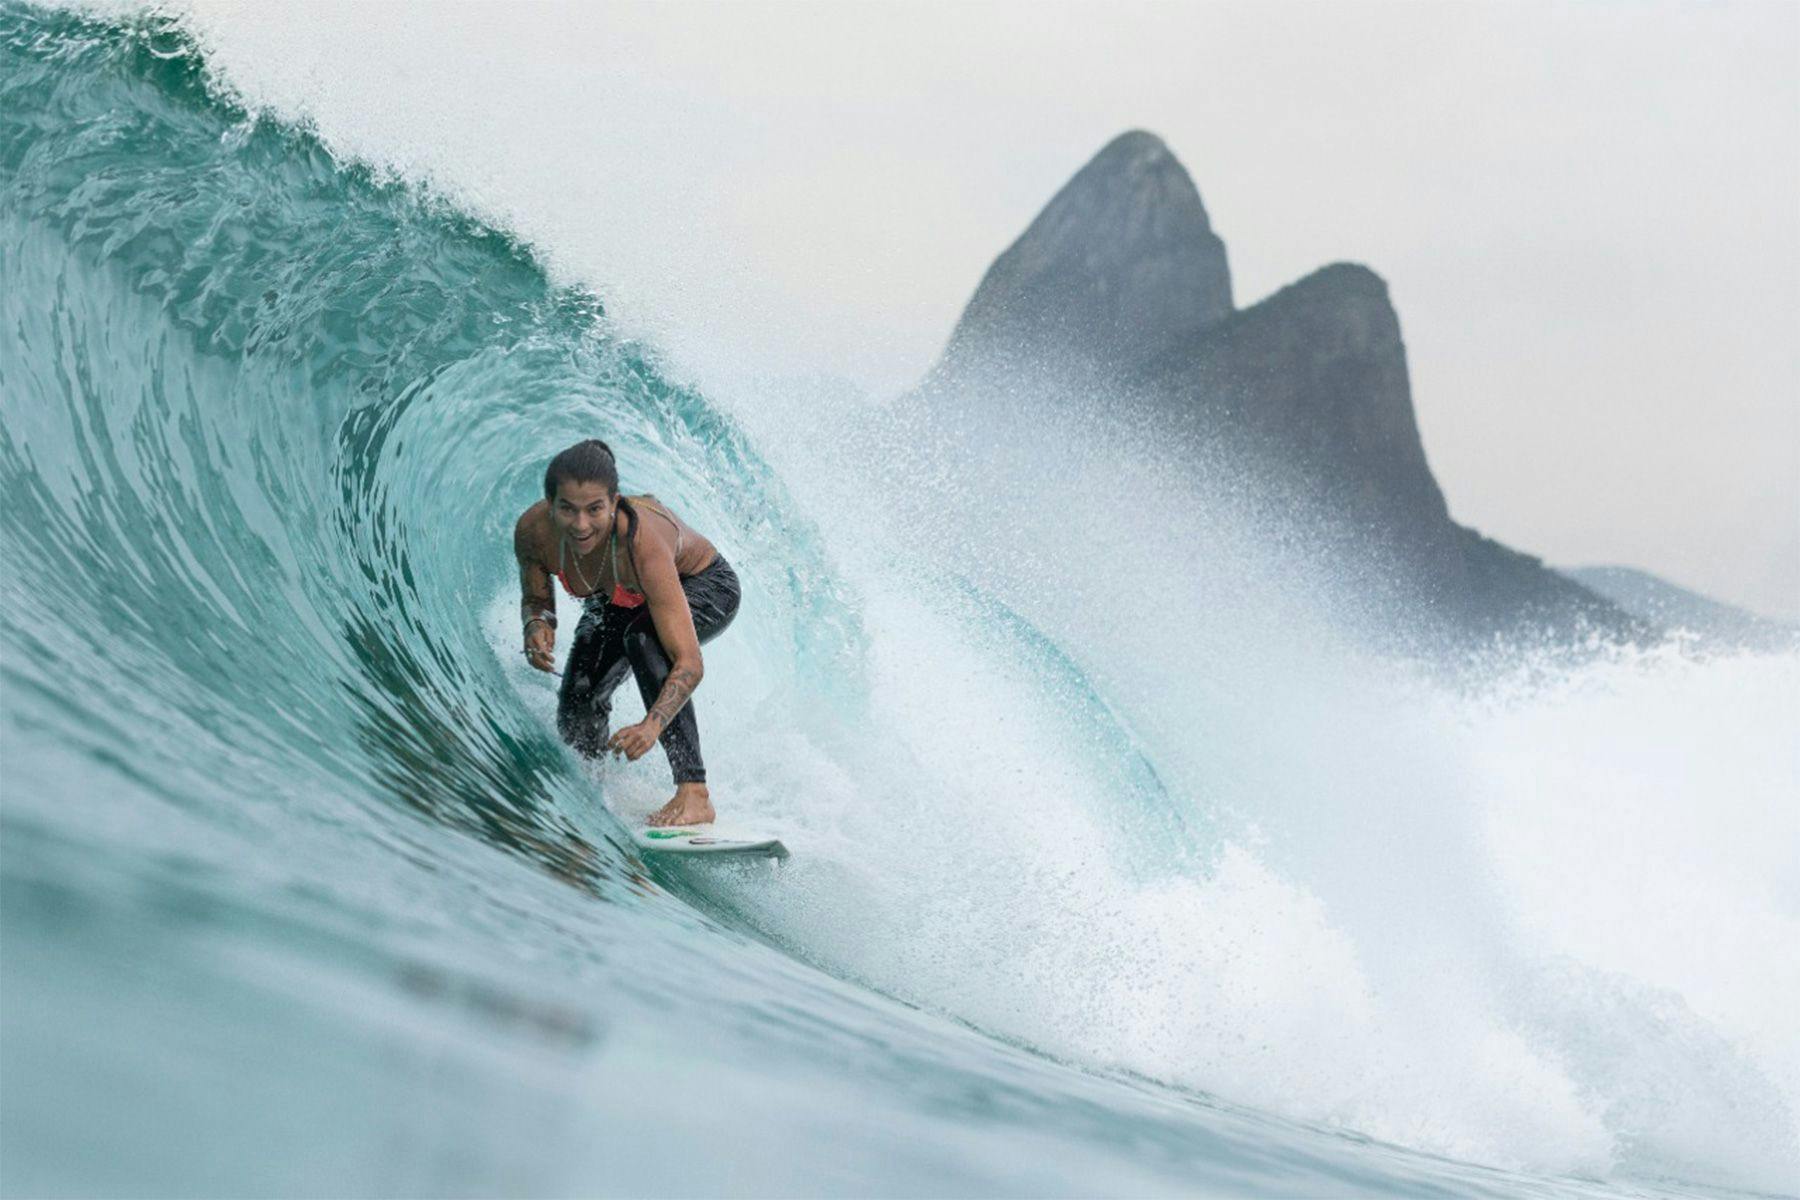 surfer in the barrel at ipanema, brazil, by ana catarina